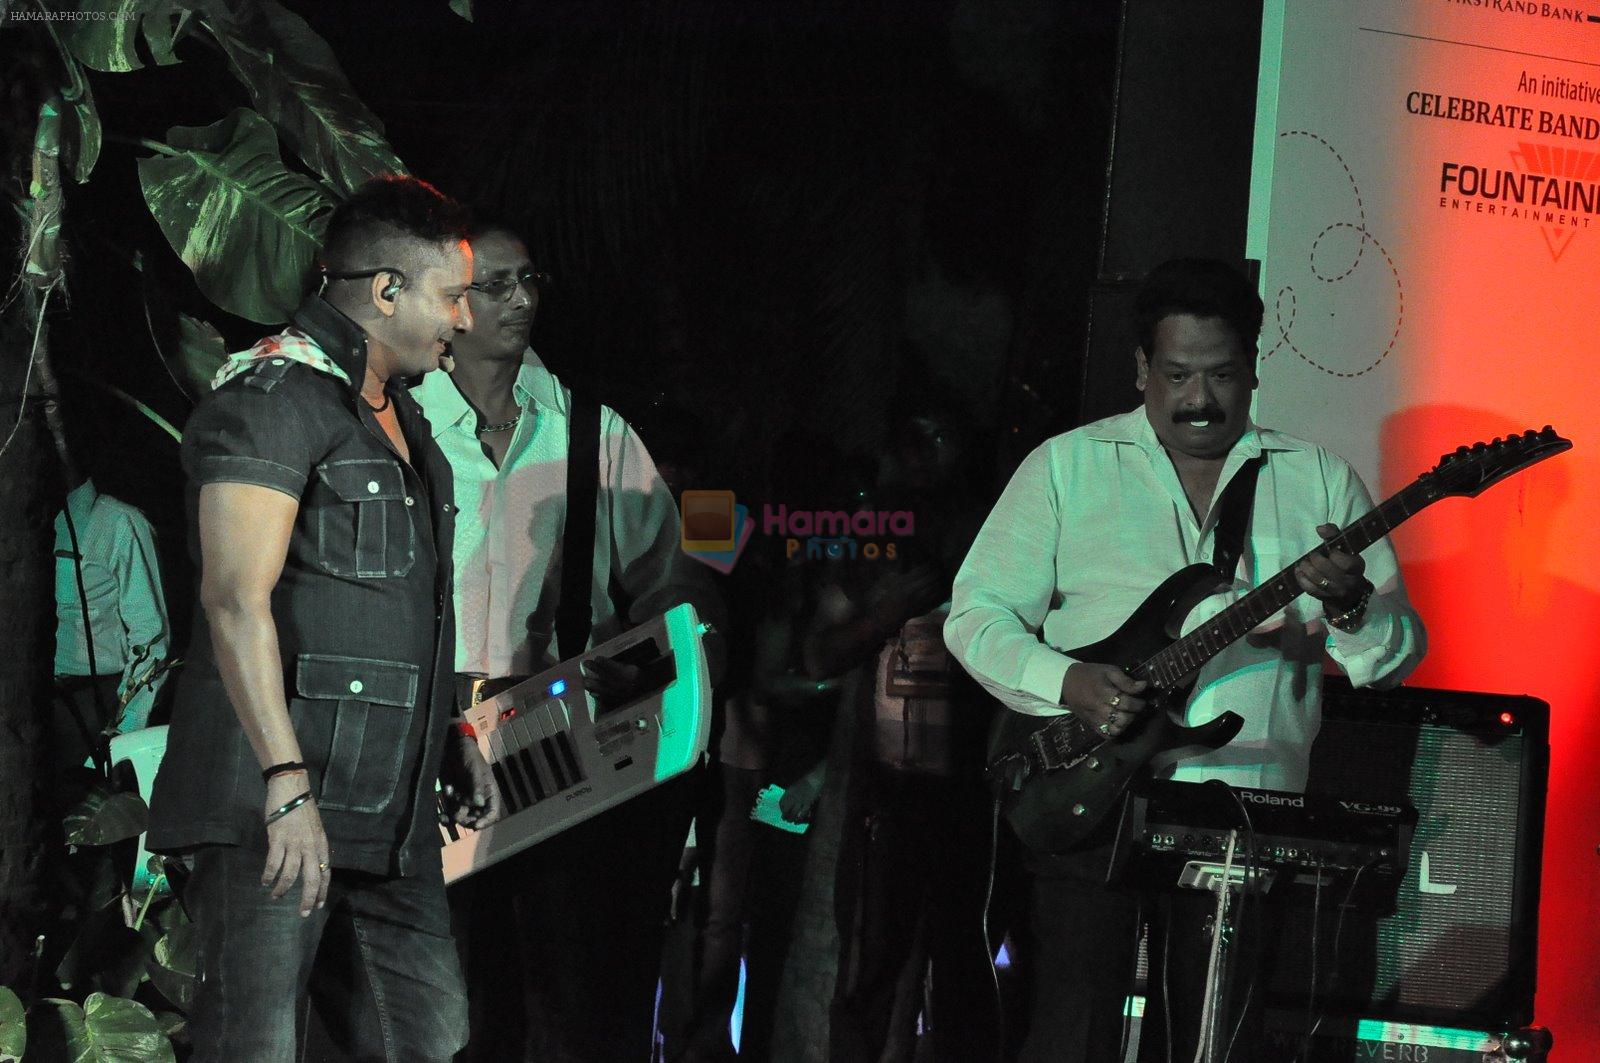 Sukhwinder Singh at Bandra Fest in Bandra on 29th Nov 2014